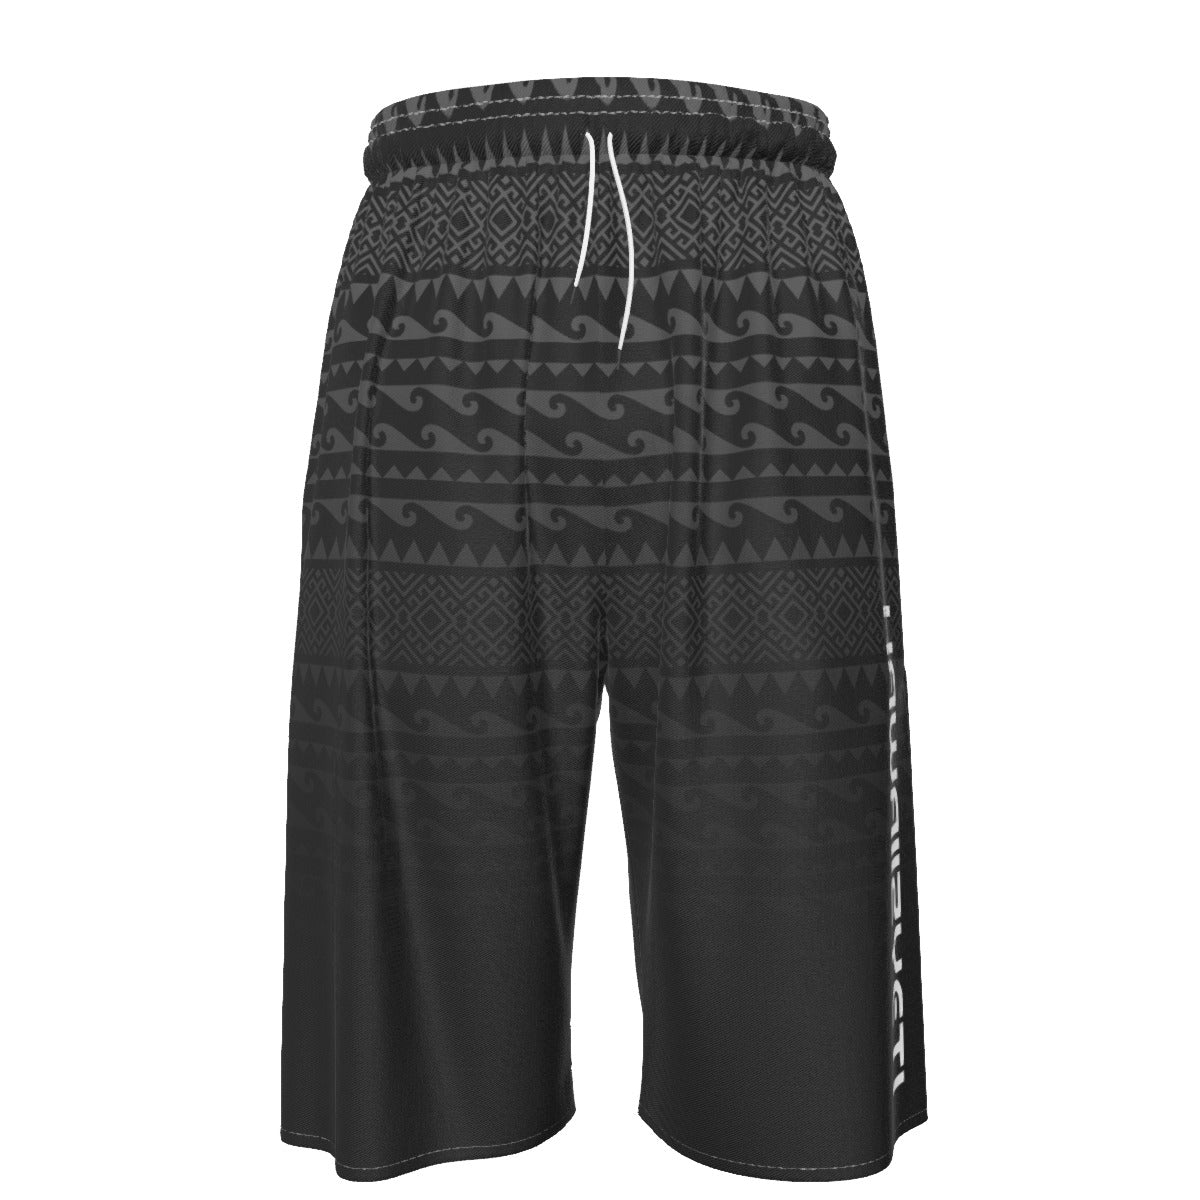 HawaiizYETI Men's AOP Shorts